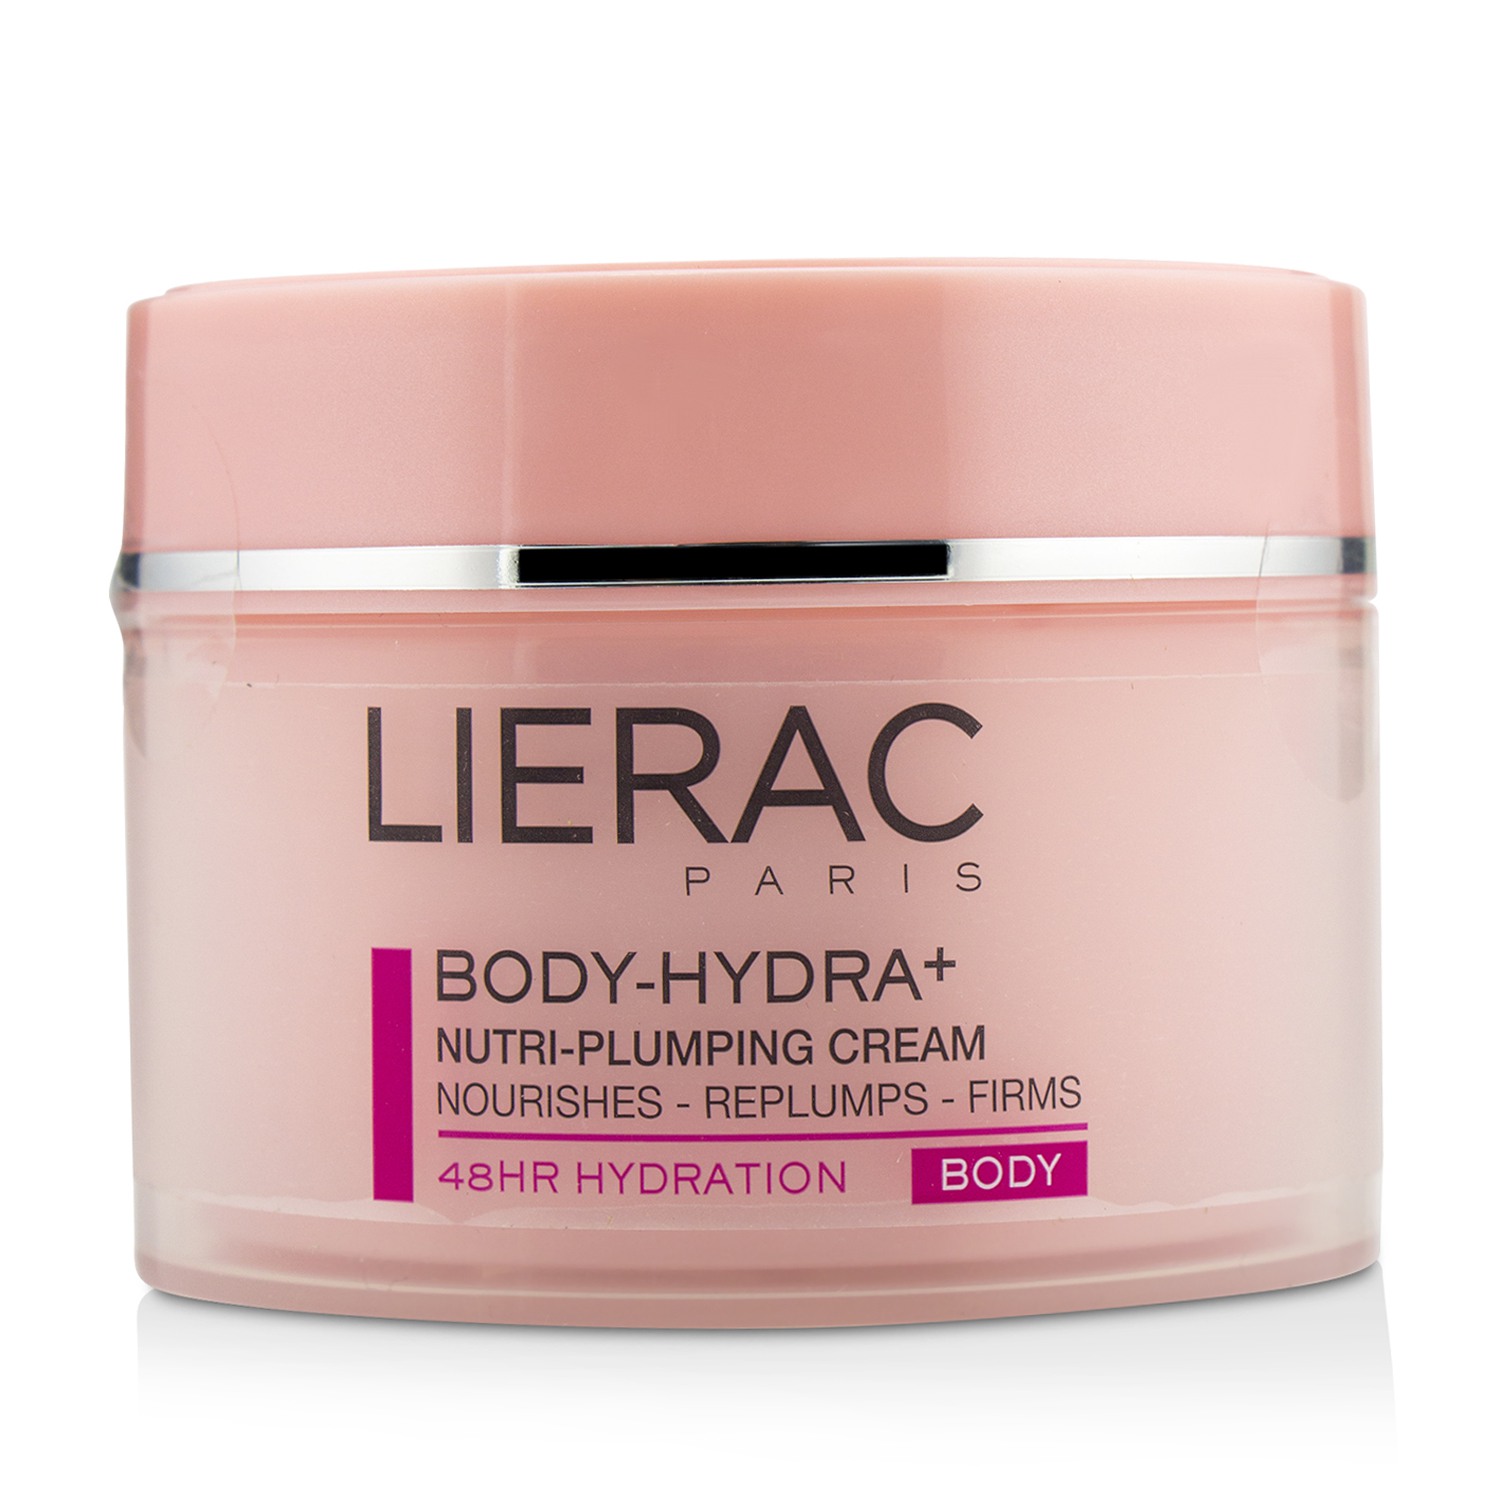 Body-Hydra+ Nutri-Plumping Cream Lierac Image